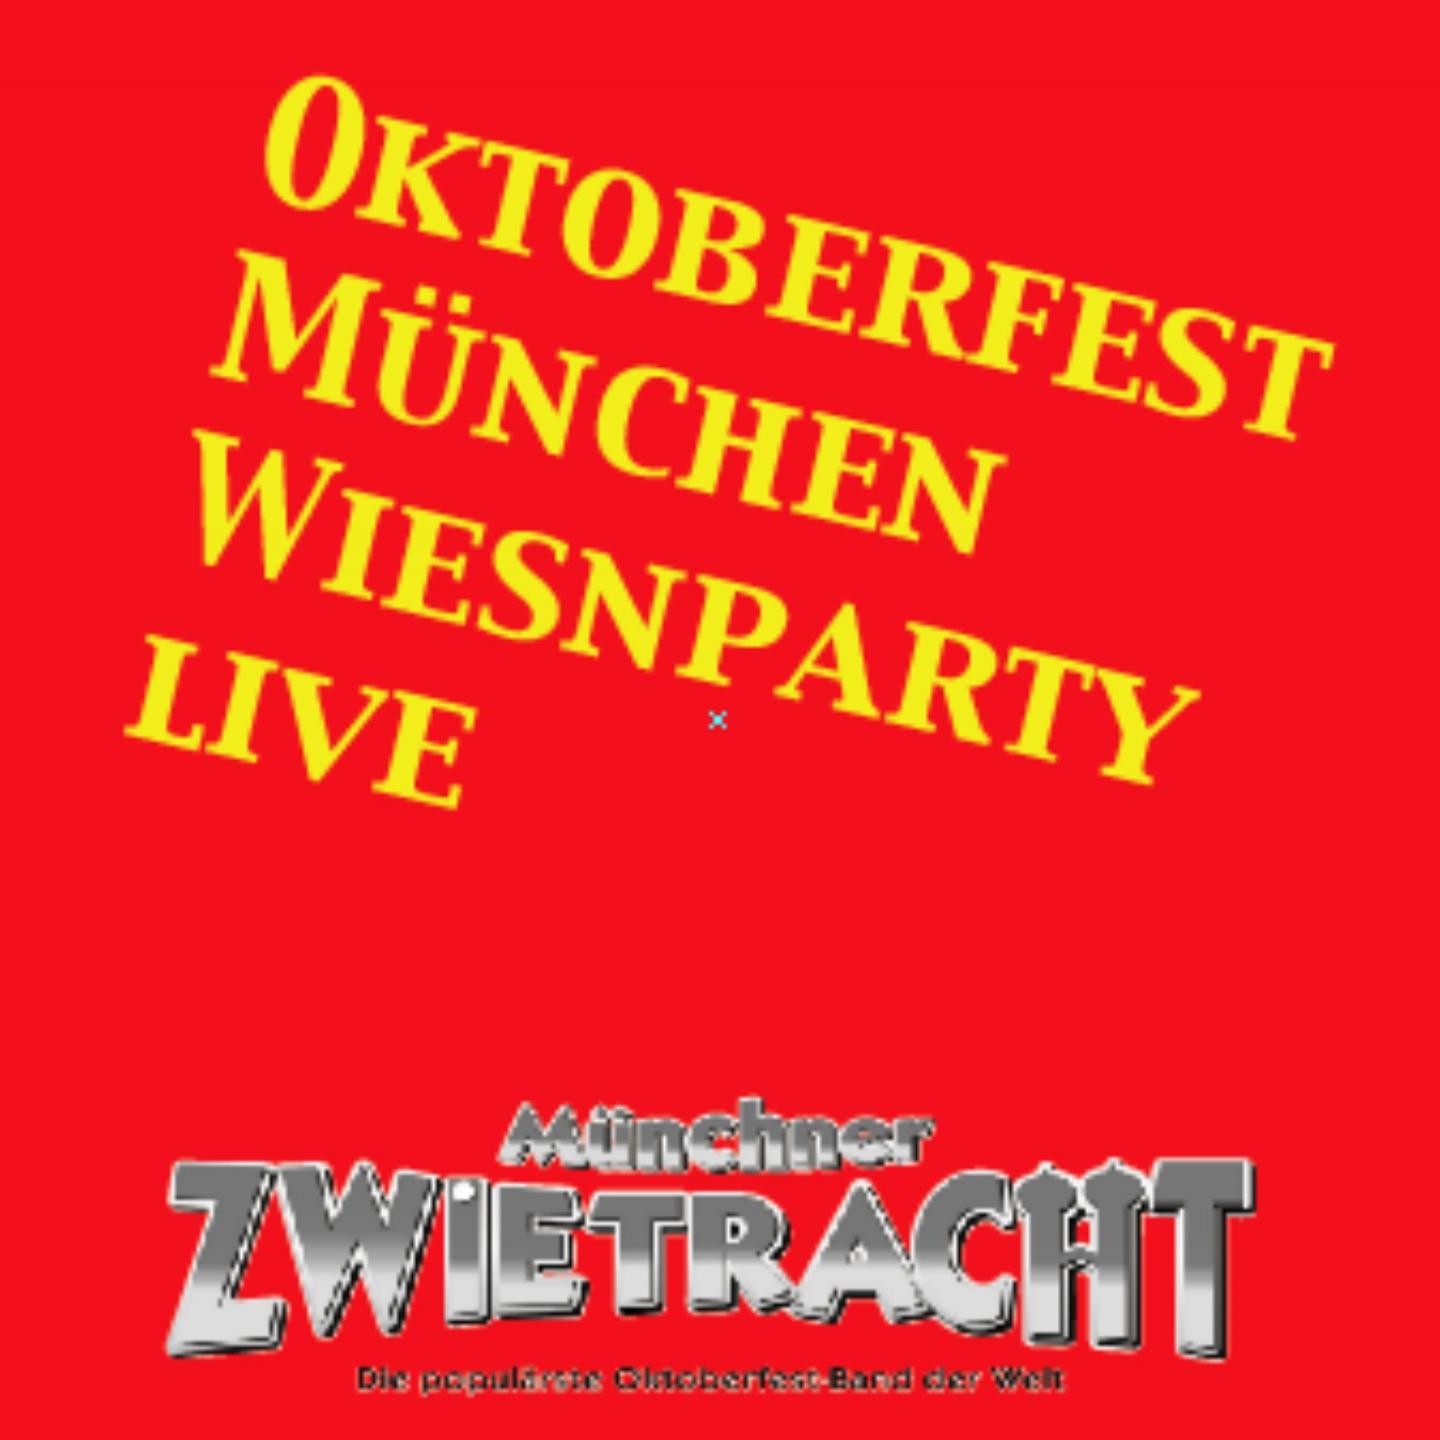 Постер альбома Oktoberfest München Wiesnparty live